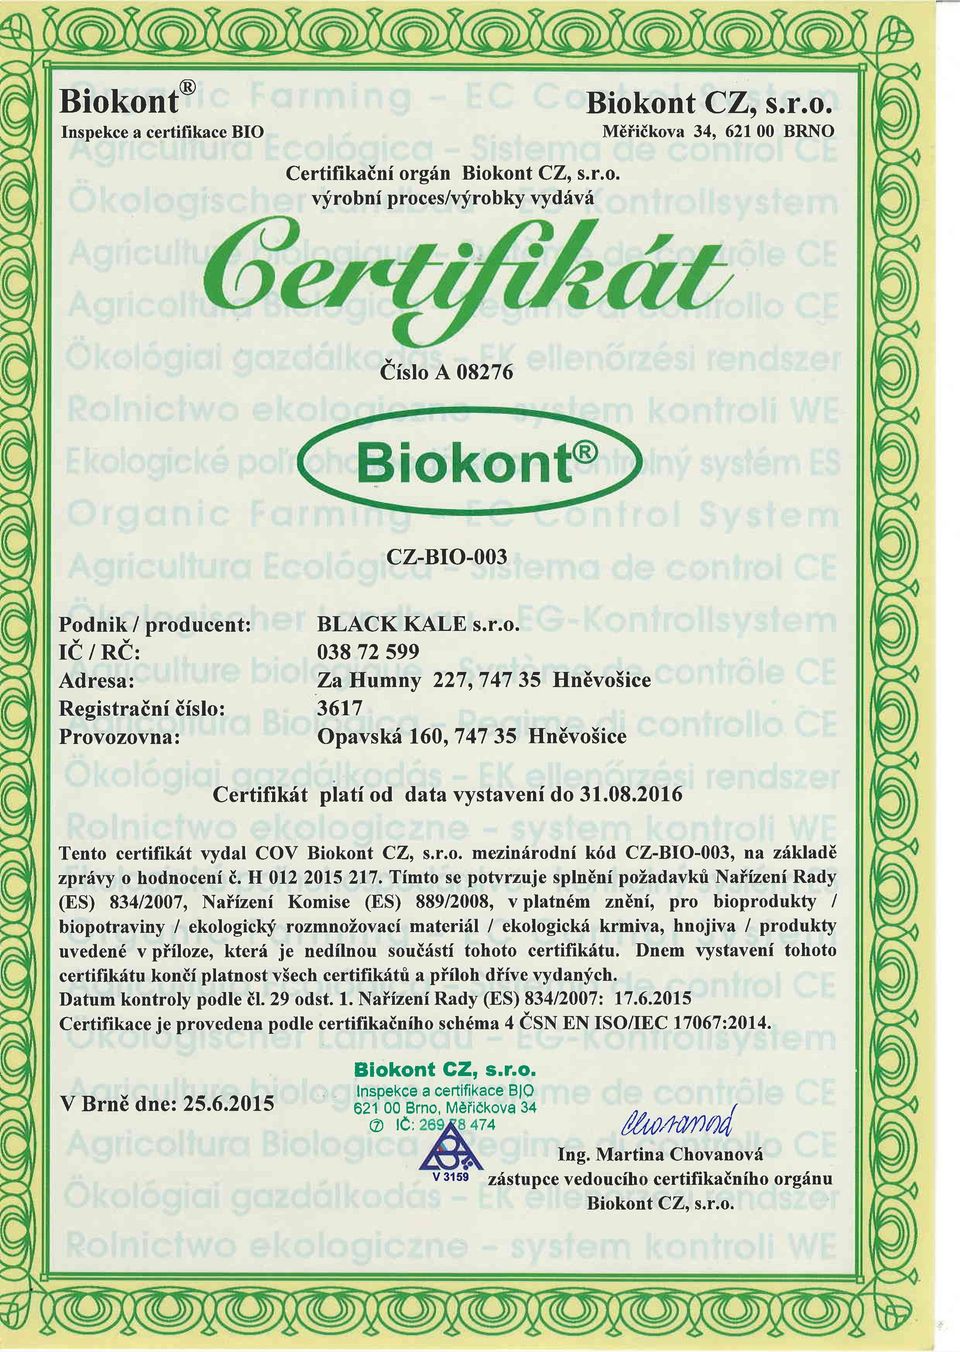 2016 Tento certifikdt rydal COV mezinfrodnf k6d CZ-B[O-003, na zhklade zprfxy o hodnoceni i. H 012 2015 217.